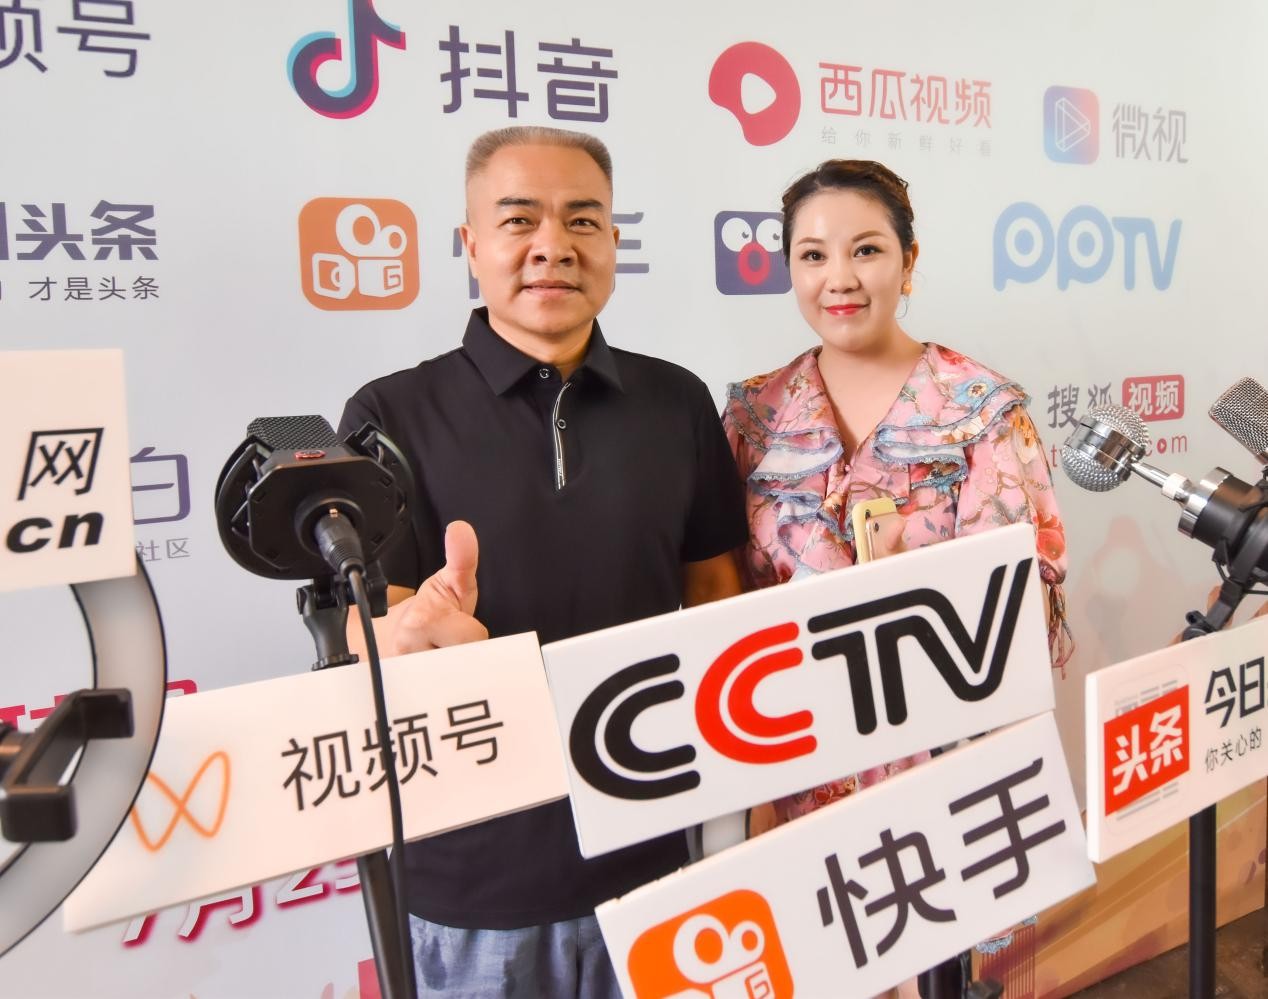 《CCTV星光达人秀-健康达人赛（PKPK长沙站）》启动仪式盛大启幕！